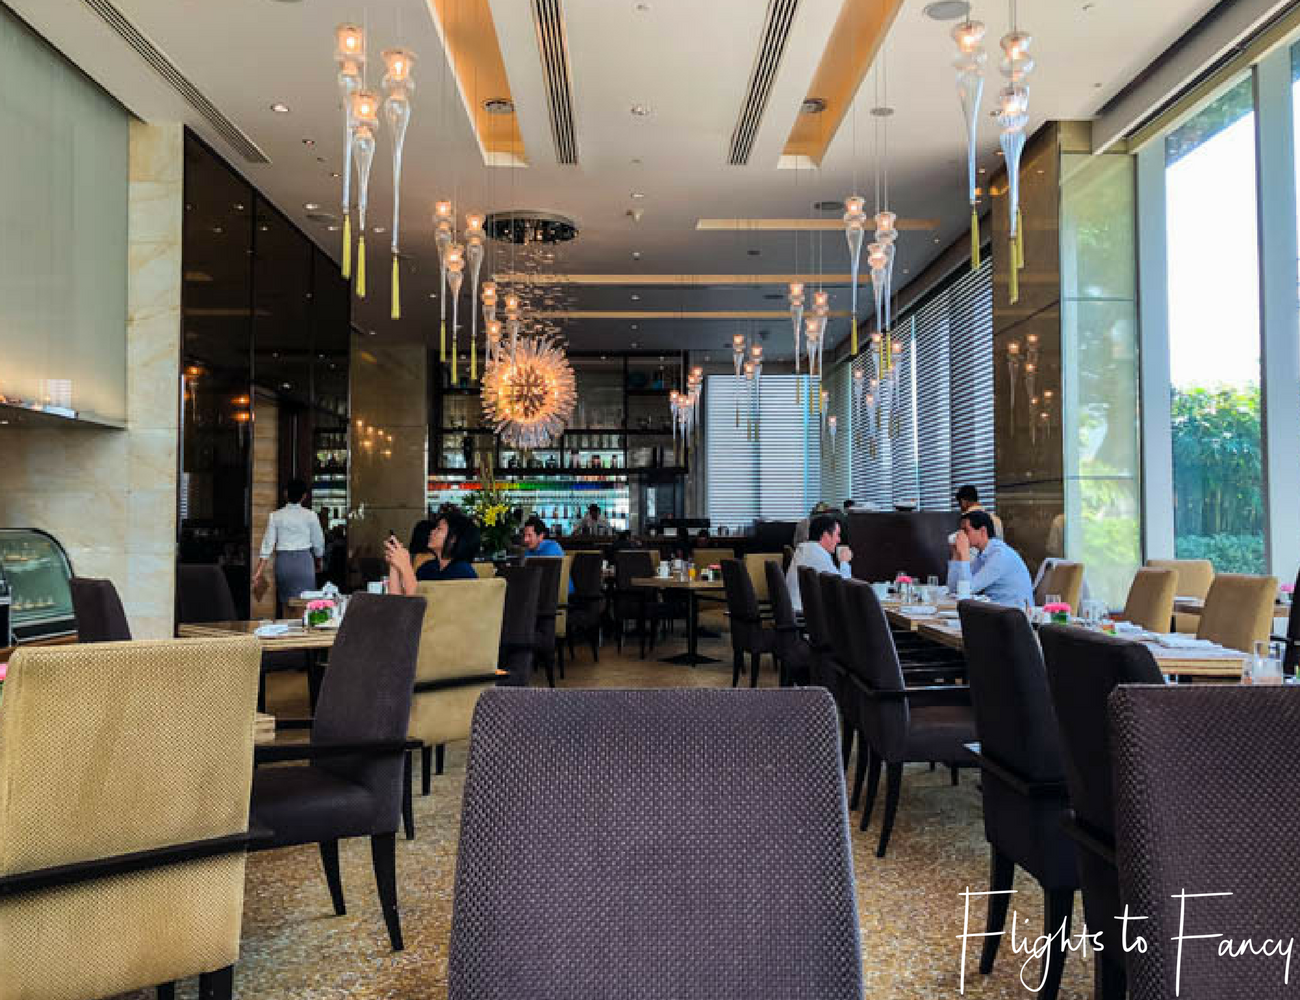 Flights To Fancy @ Raffles Makati Manila - Restaurant